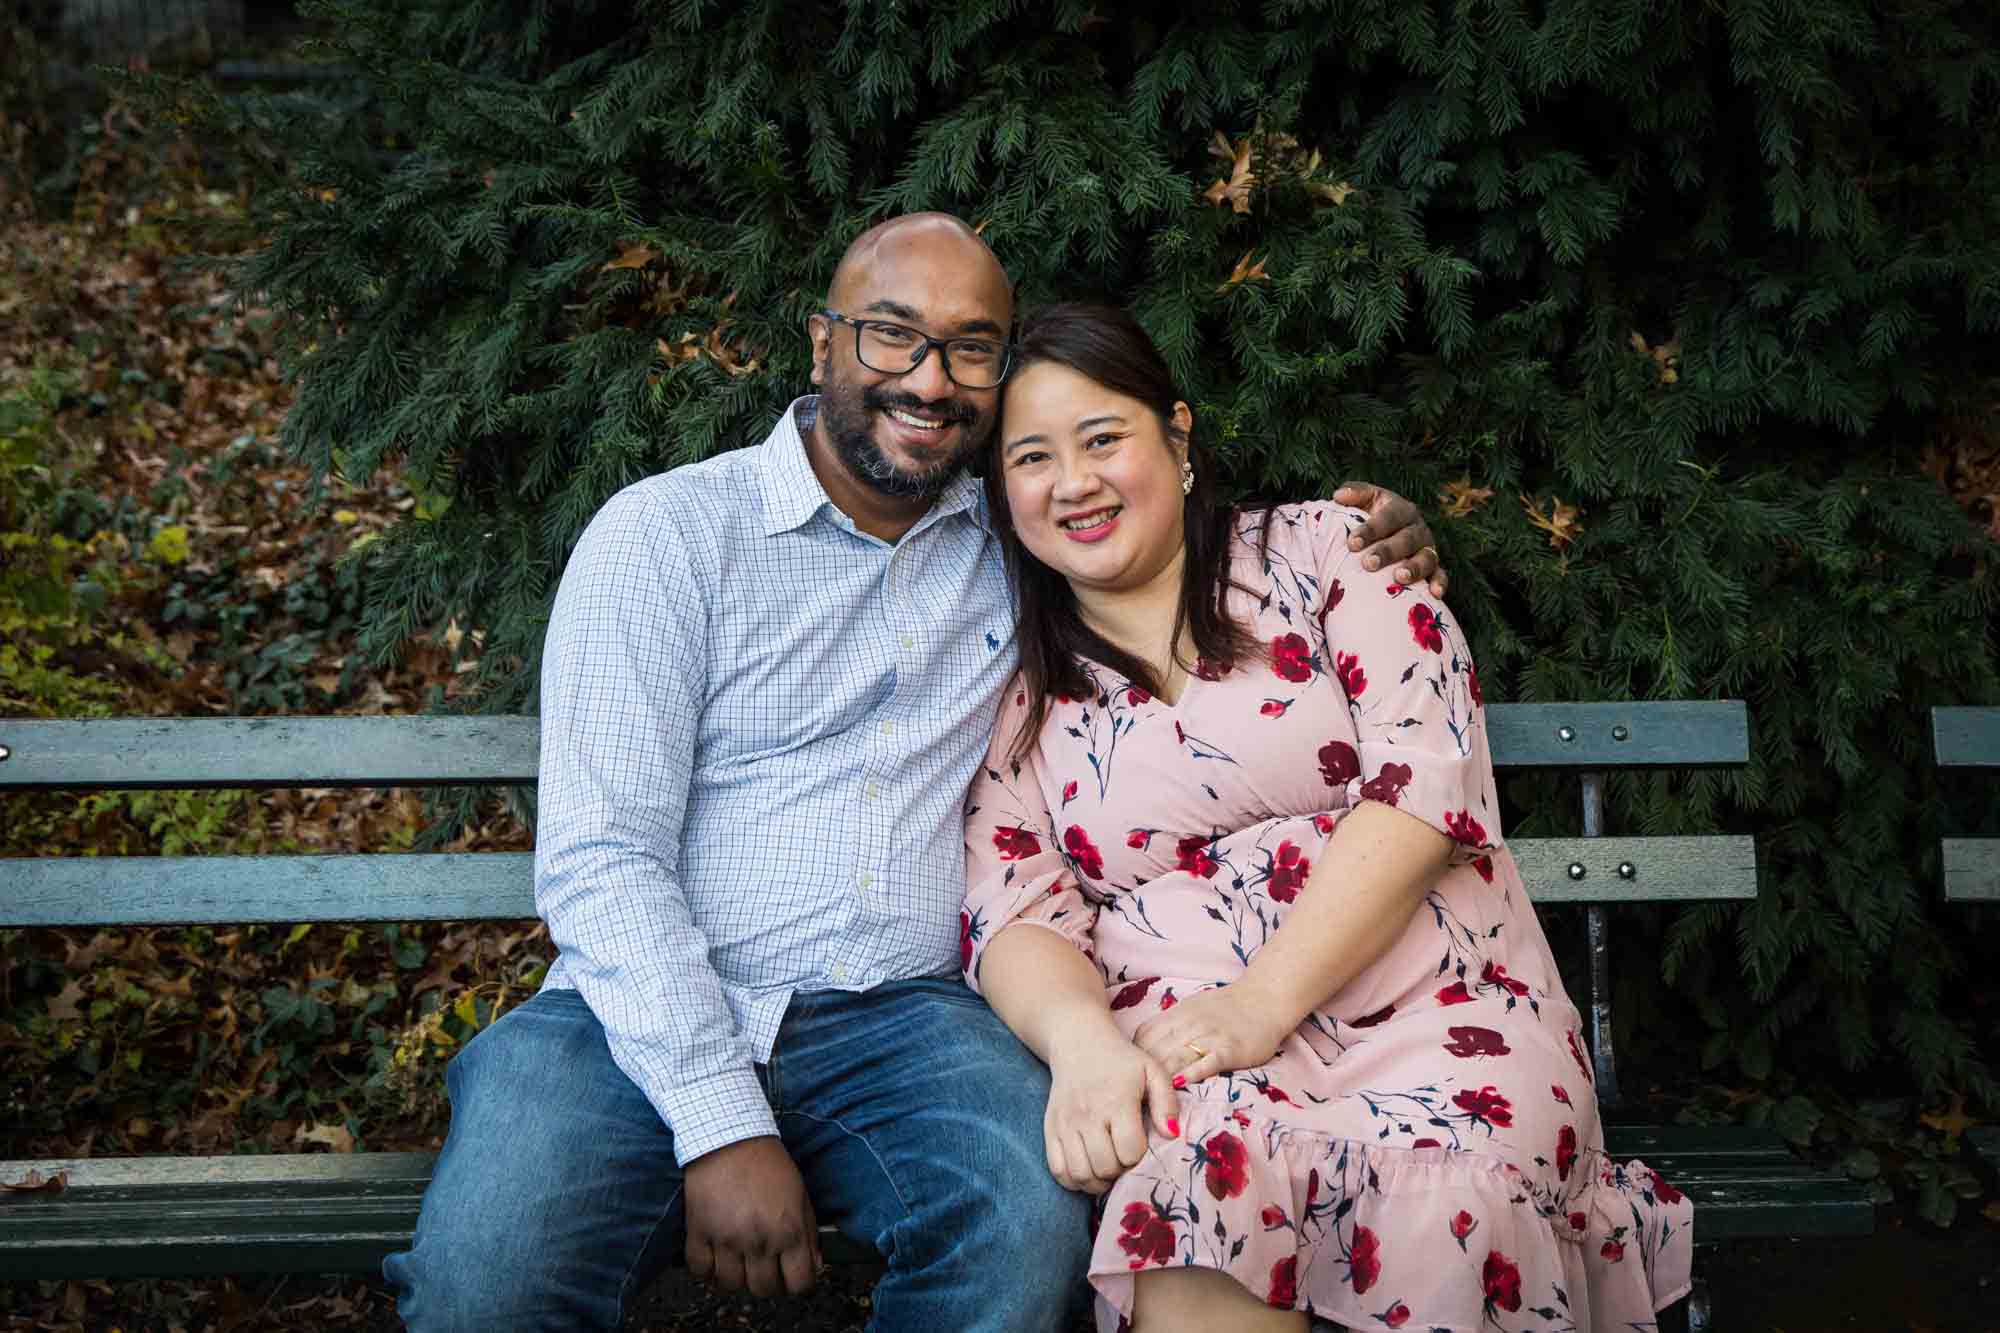 Central Park portrait of couple hugging together on bench